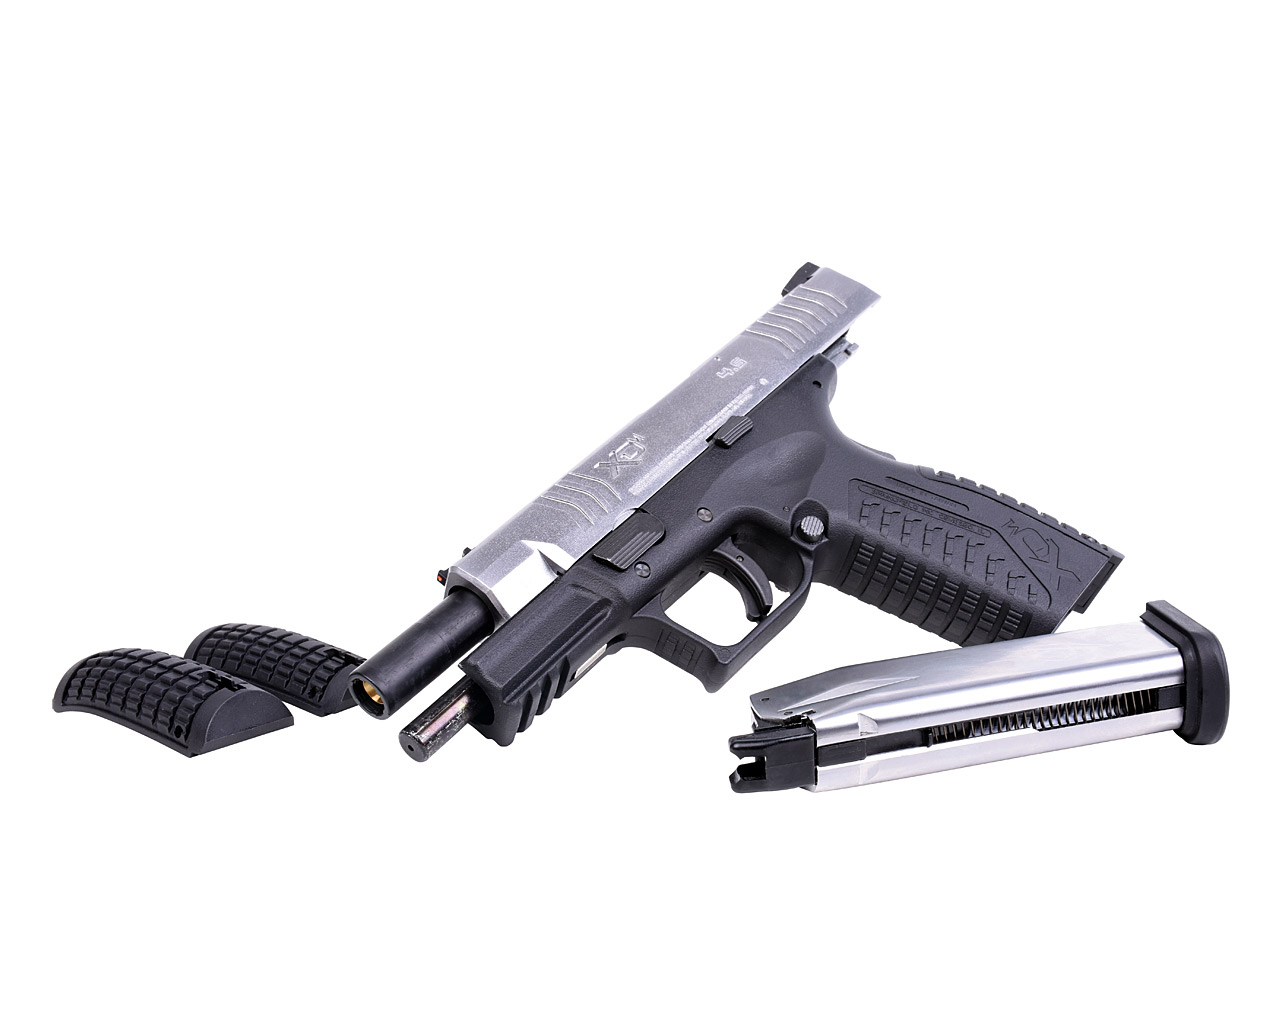 CO2 Pistole Springfield XDM 4.5 Zoll Full-Size Blowback bicolor Kaliber 4,5 mm BB (P18)